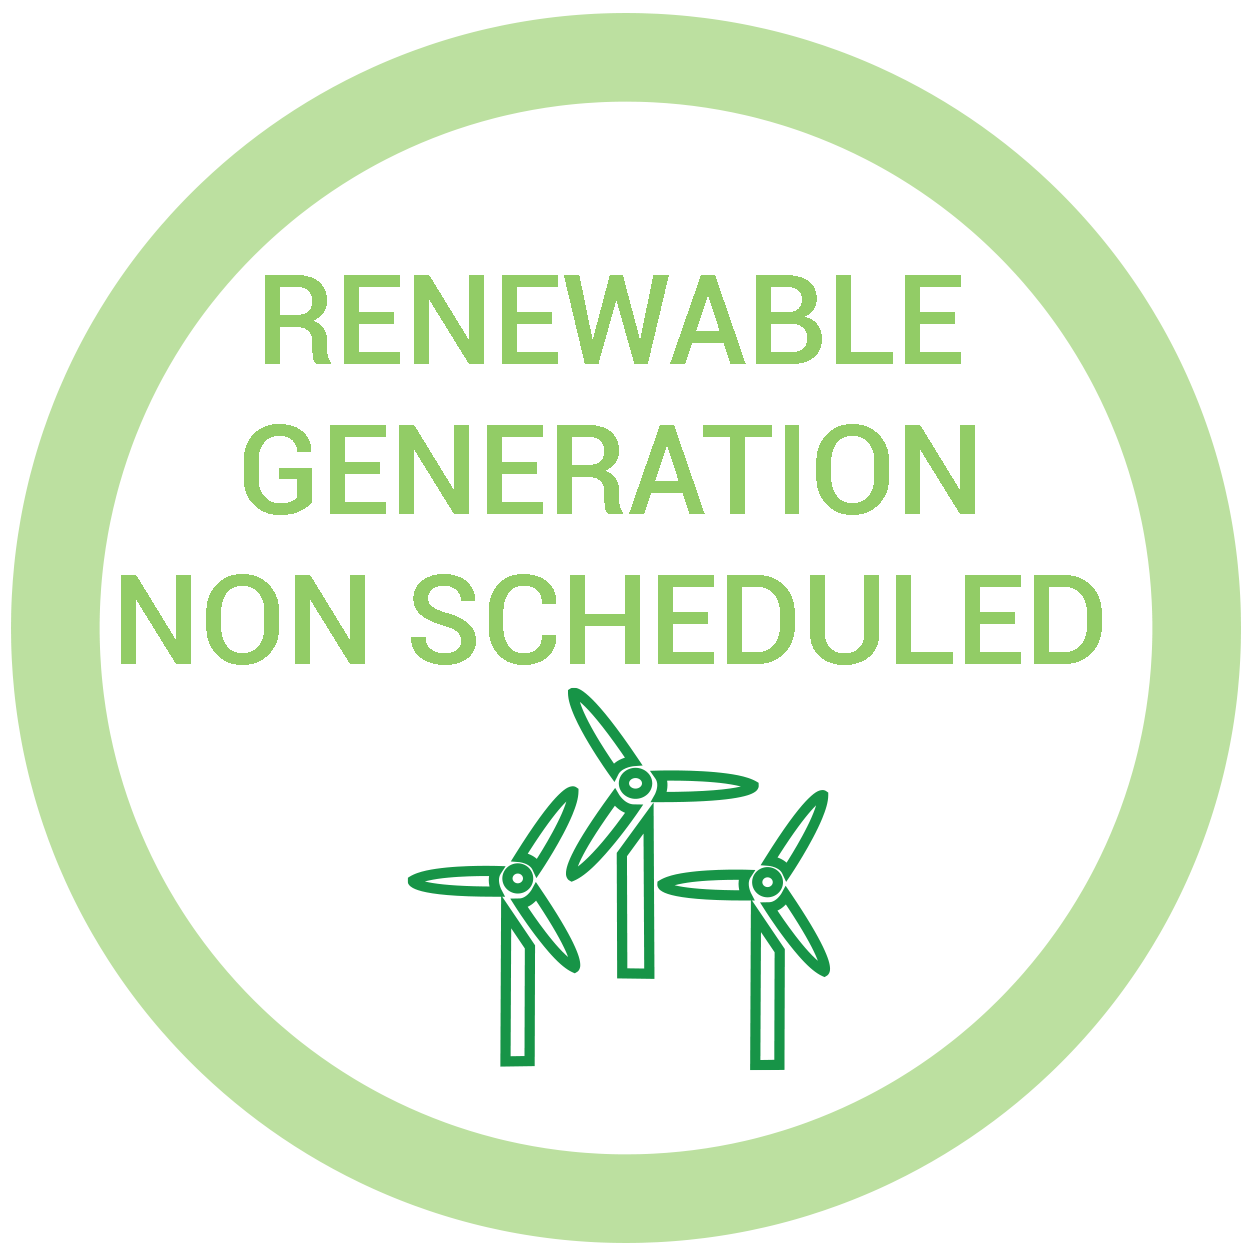 Renewable Generation Non Scheduled